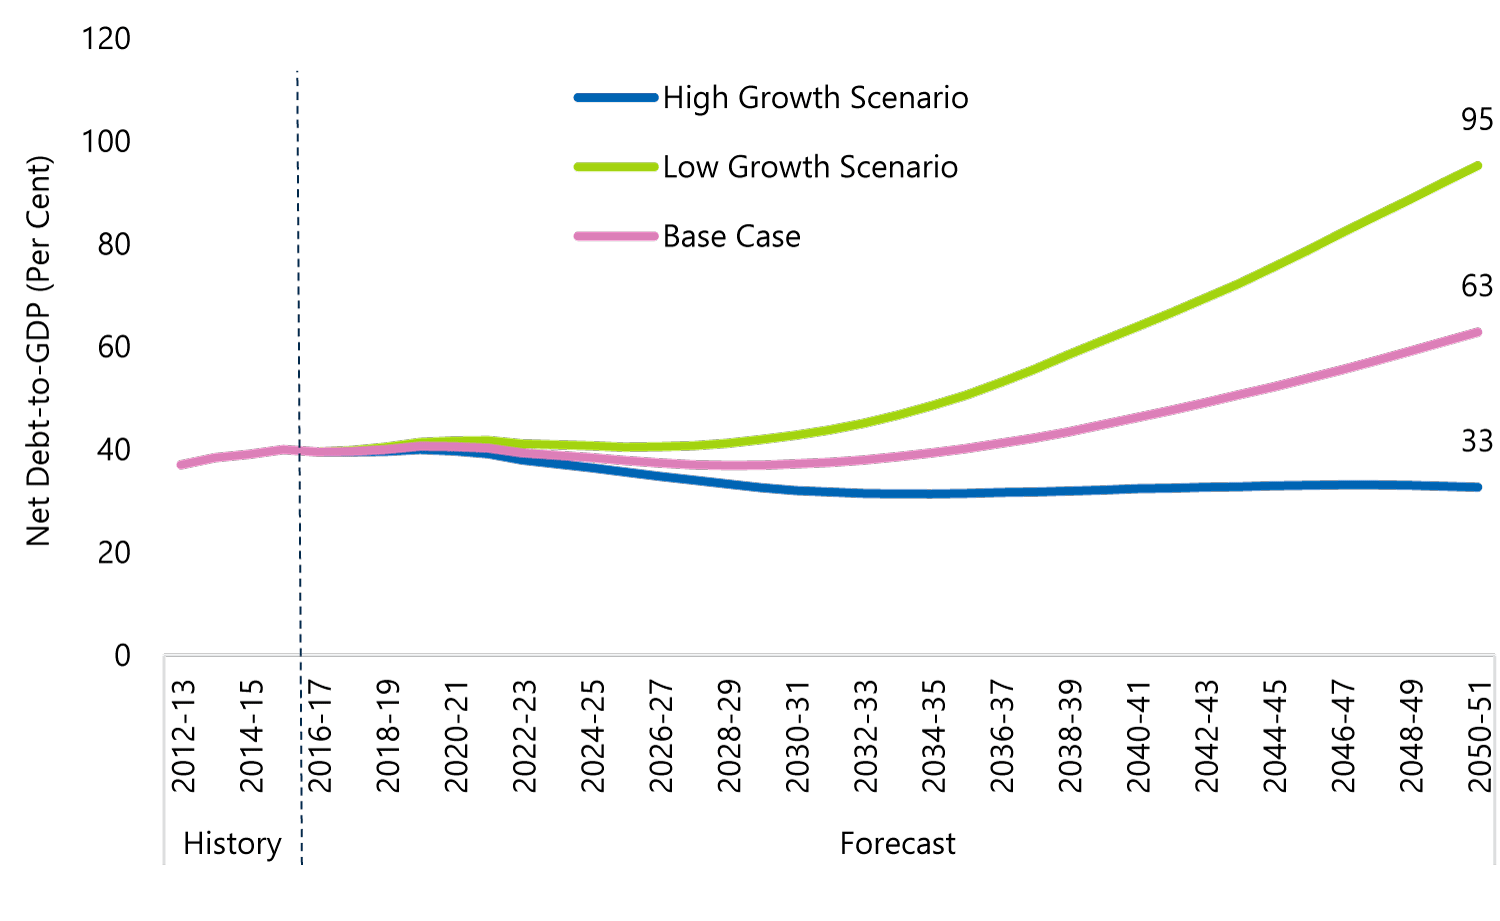 Net Debt-to-GDP Ratio by Economic Growth Scenario